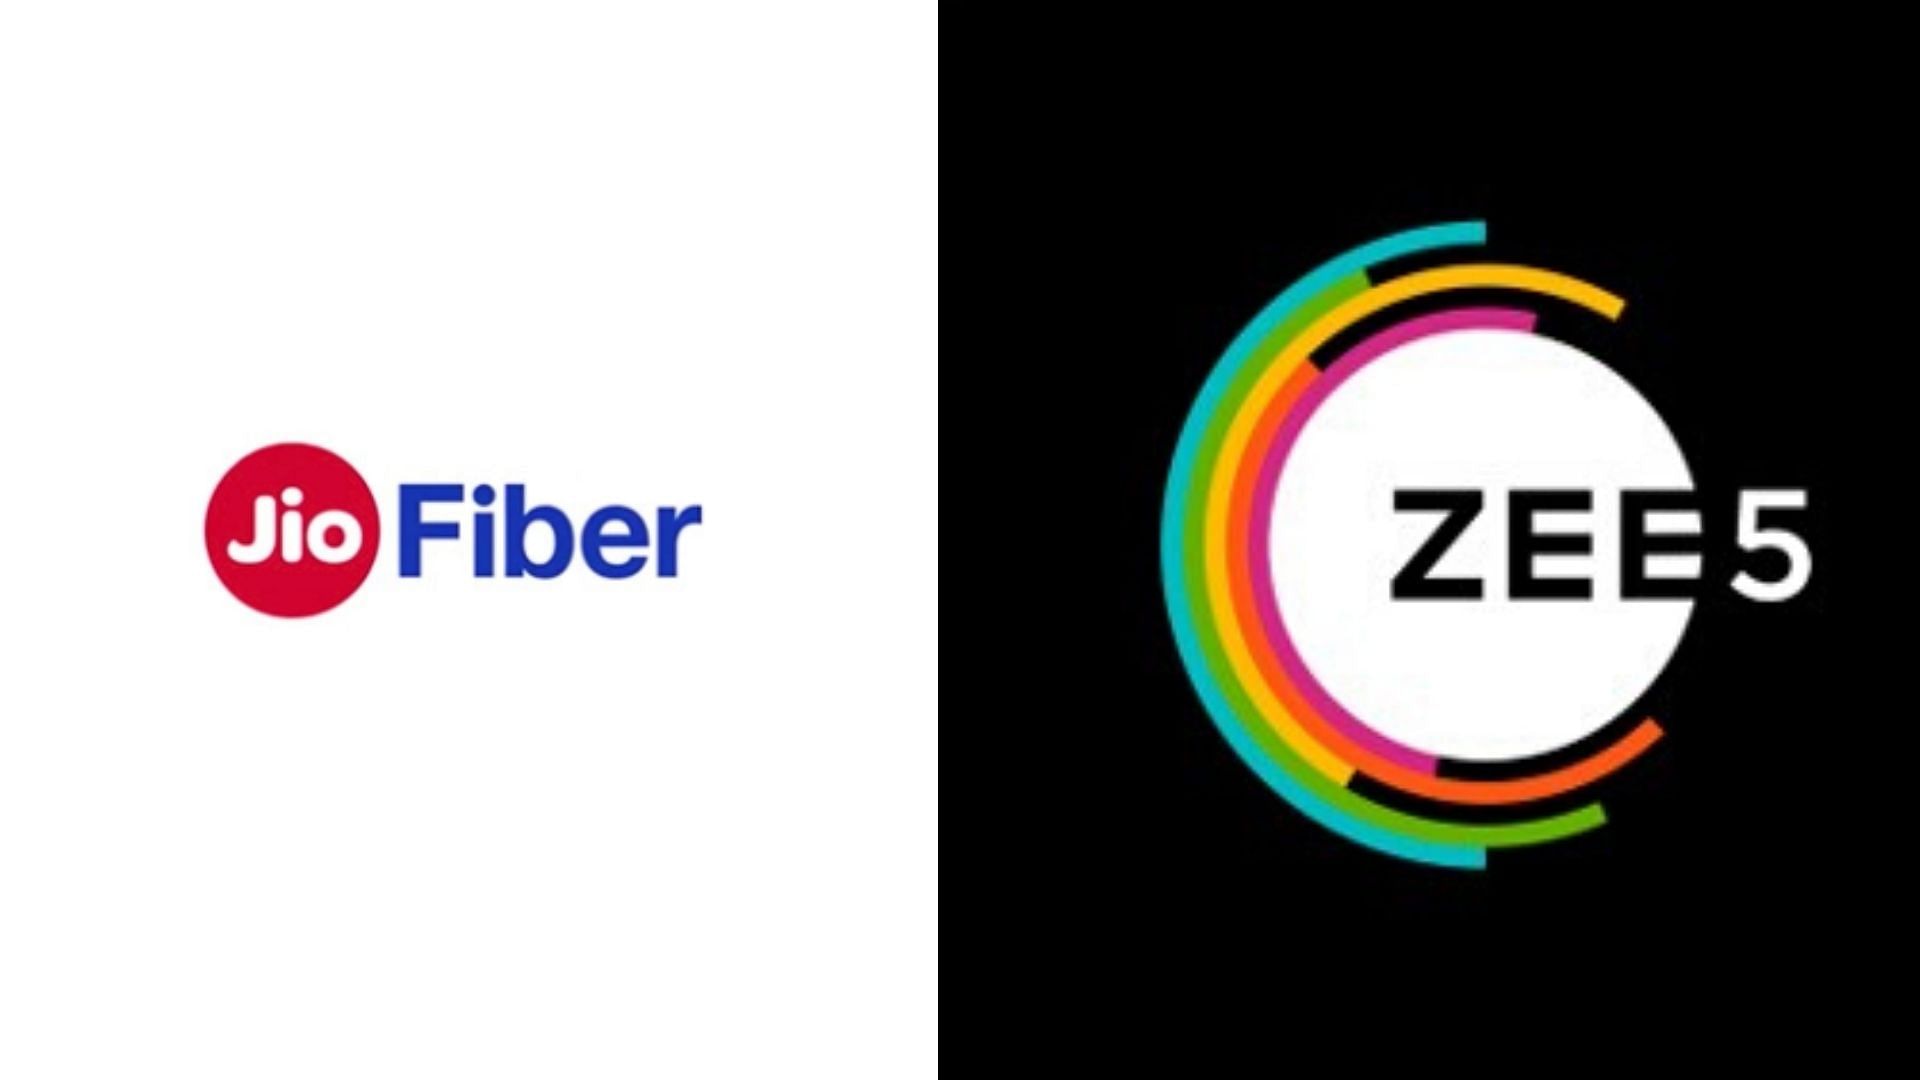 Partnering with JioFiber has helped ZEE5 reach more people